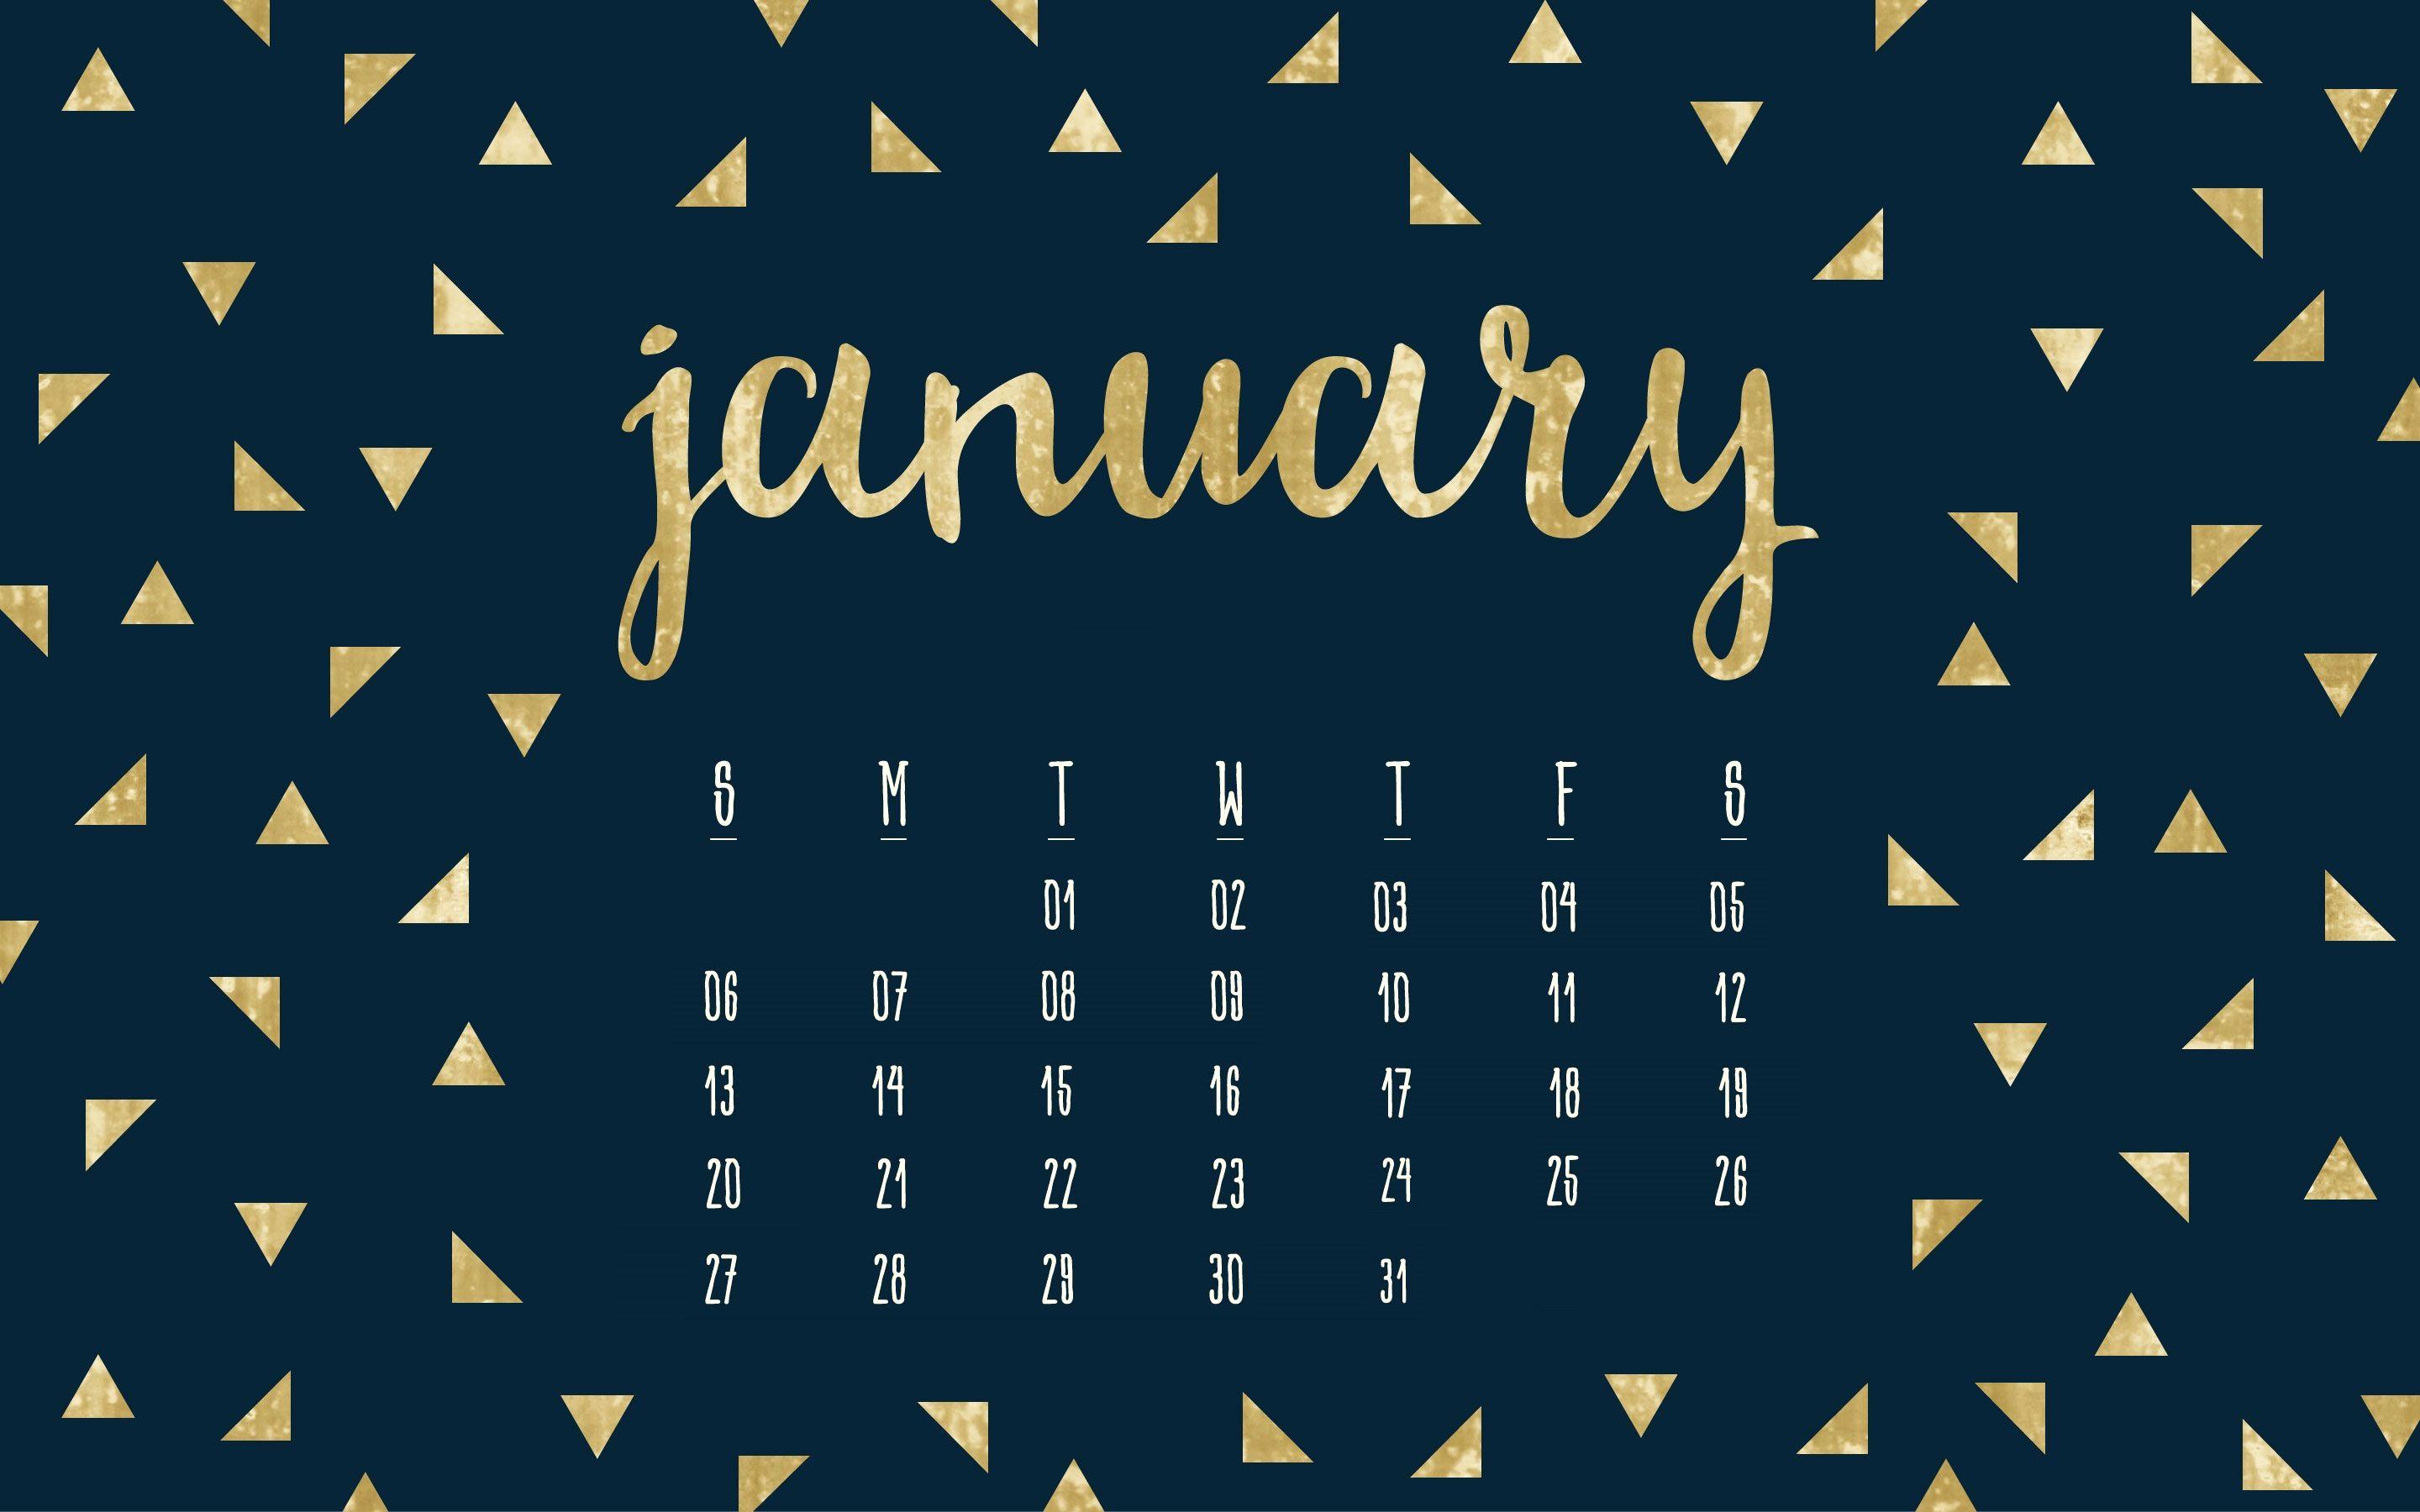 Free Desktop Calendar 2018 2019 January 2019 HD Calendar Wallpaper